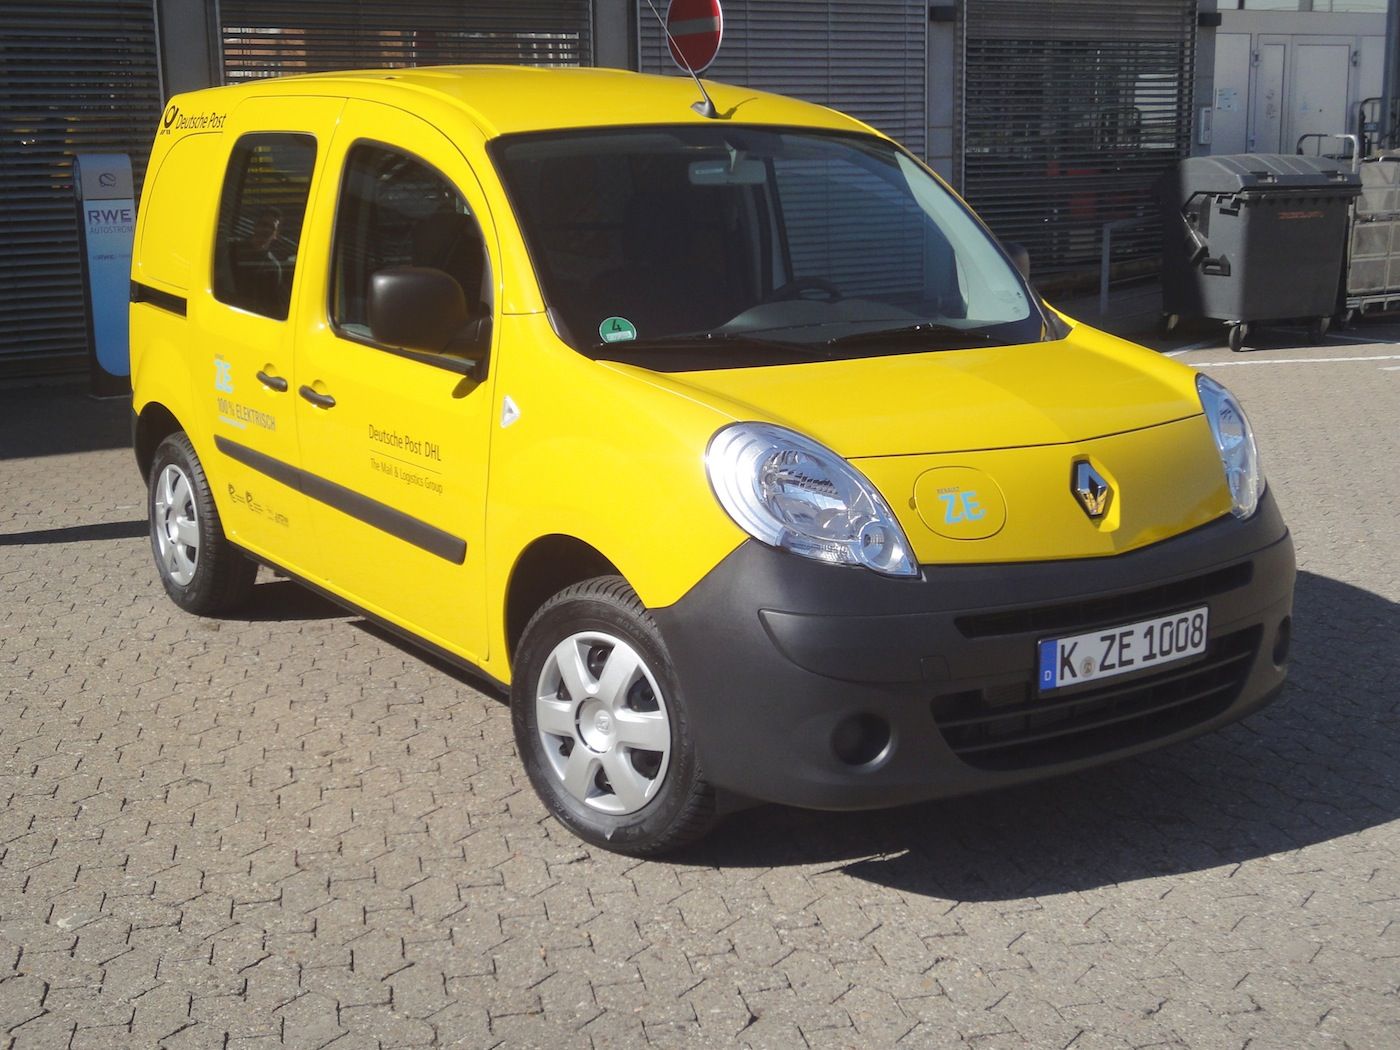 Renault Kangoo electrico utilizado por DHL para sus entregas urbanas